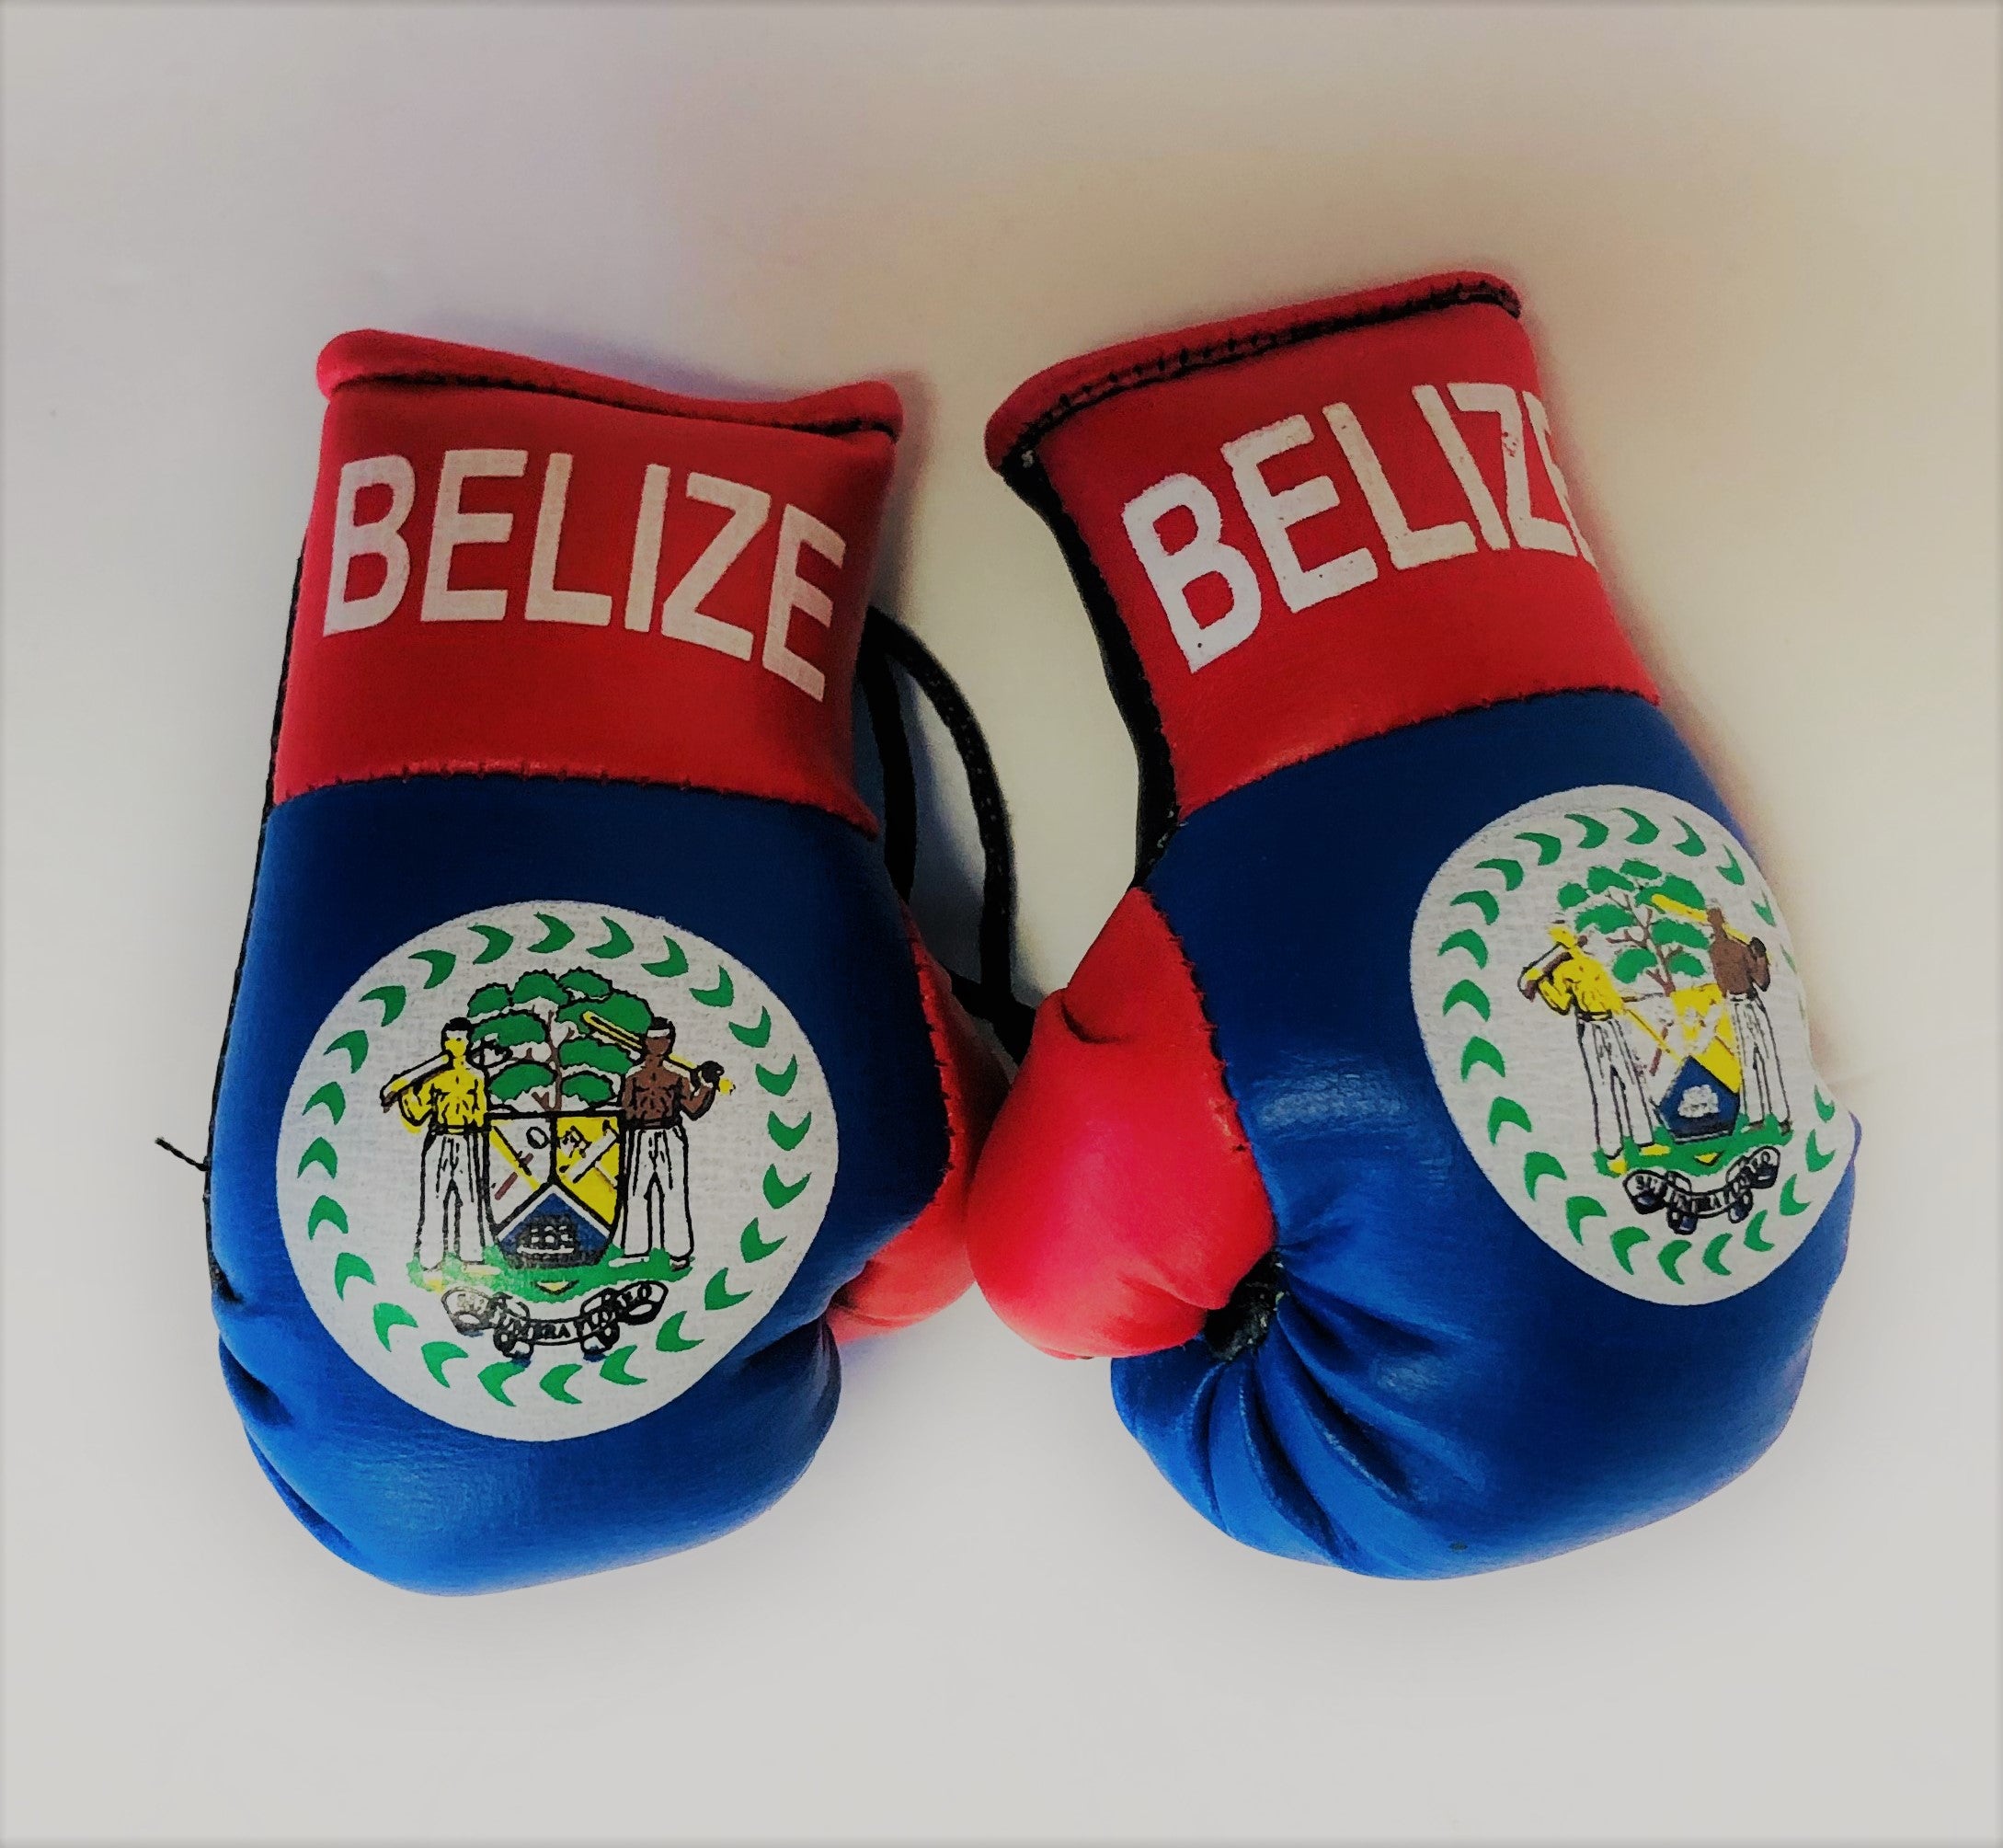 Belize Flag Mini Boxing Gloves